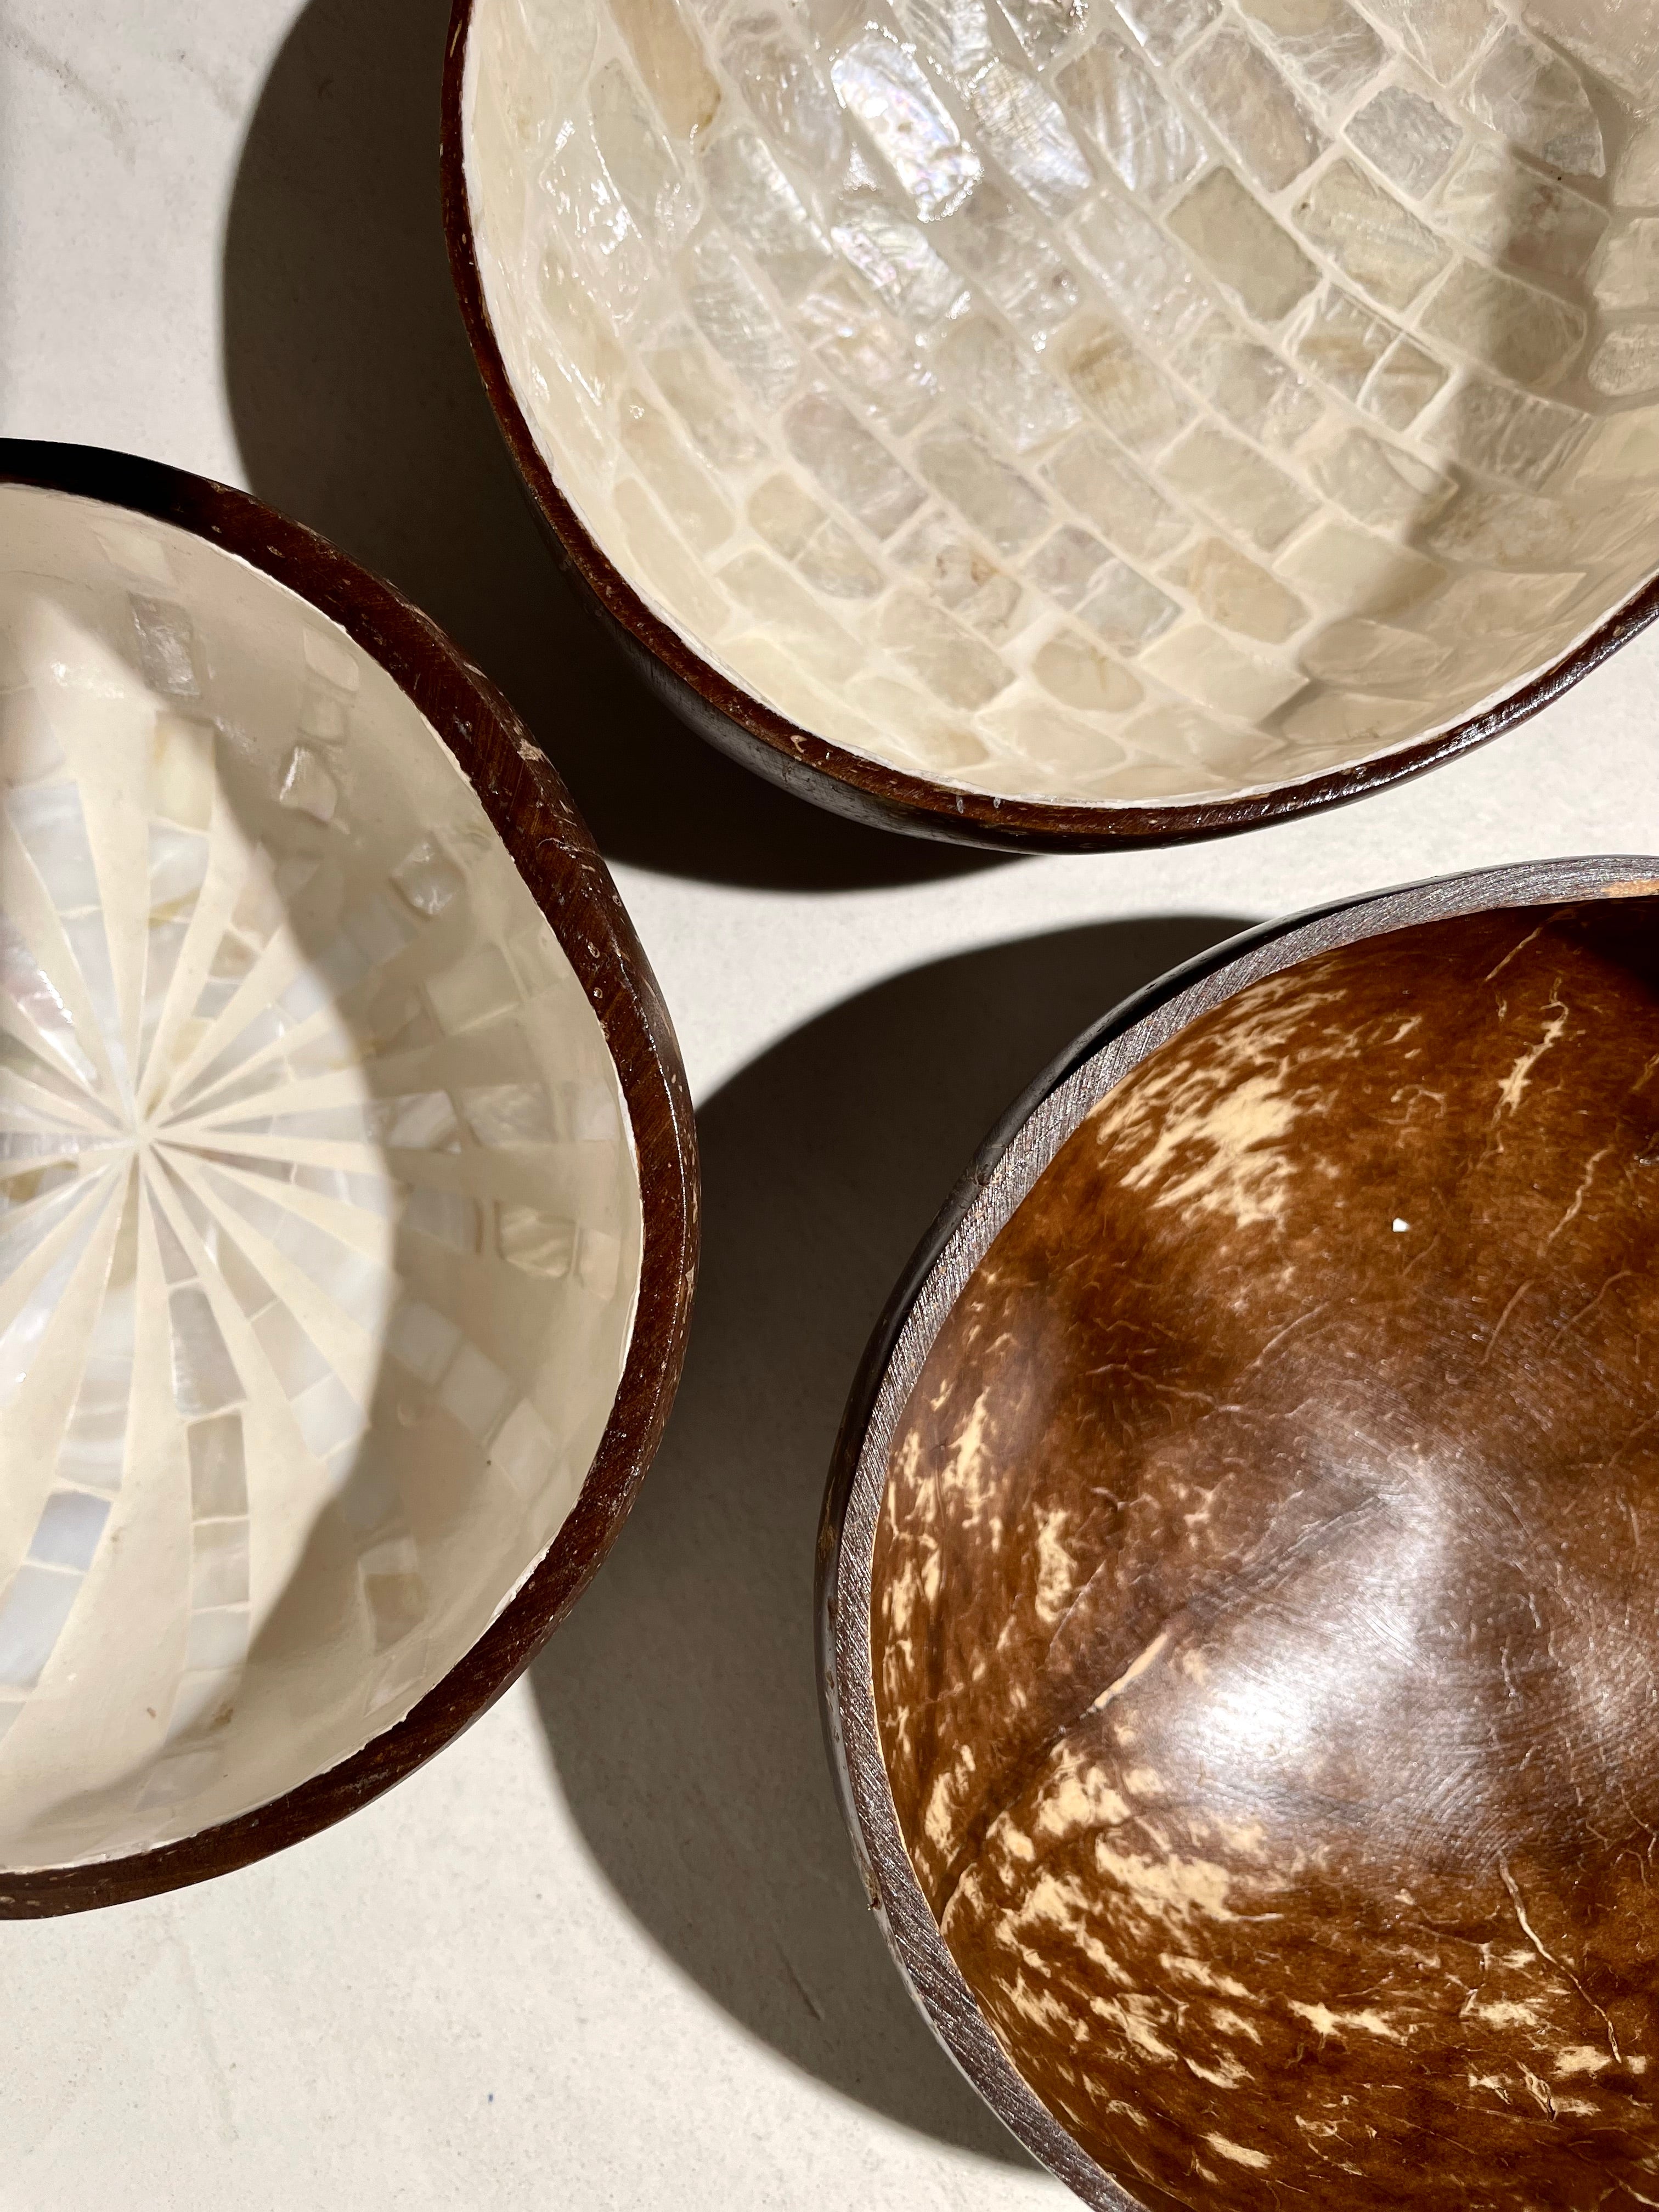 Coconut Bowl - White Mosaic